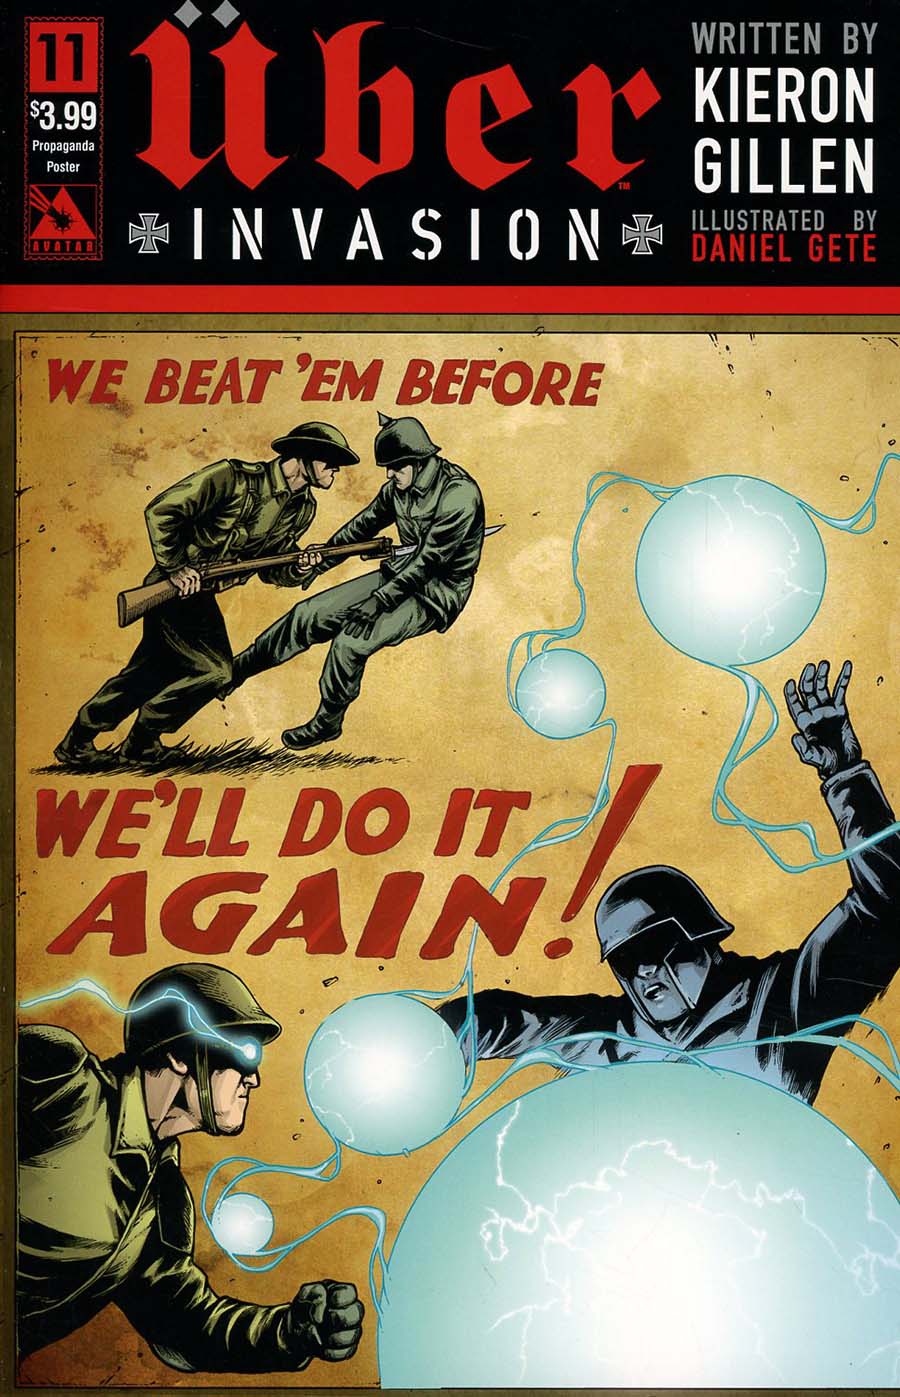 Uber Invasion #11 Cover D Propaganda Poster Cover